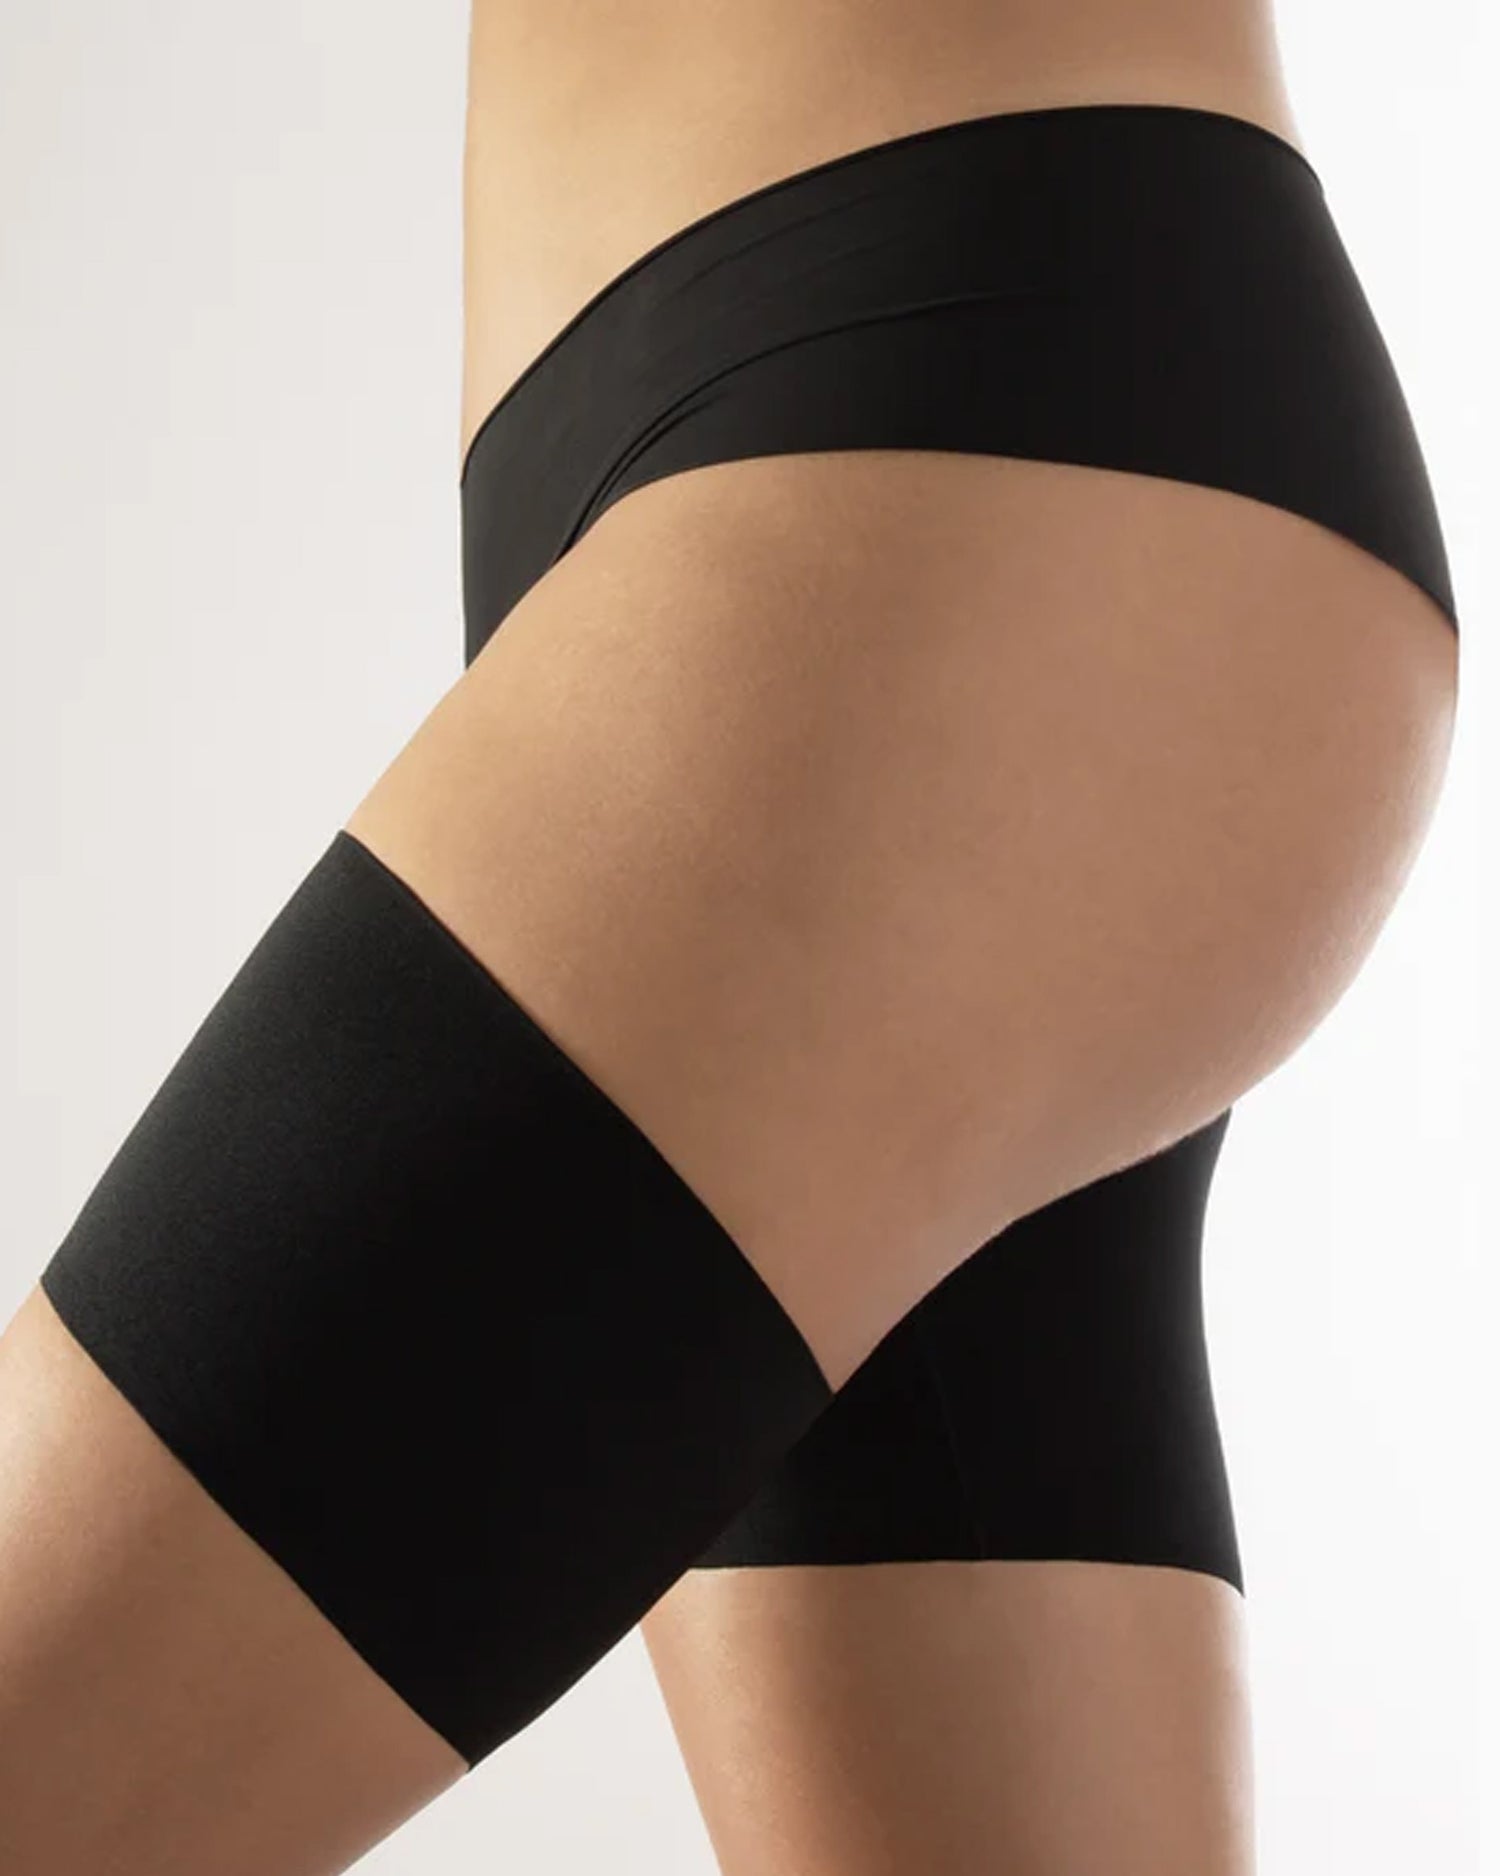 Plain black anti-chafing thigh bands to prevent thigh rubbing / "chub rub"